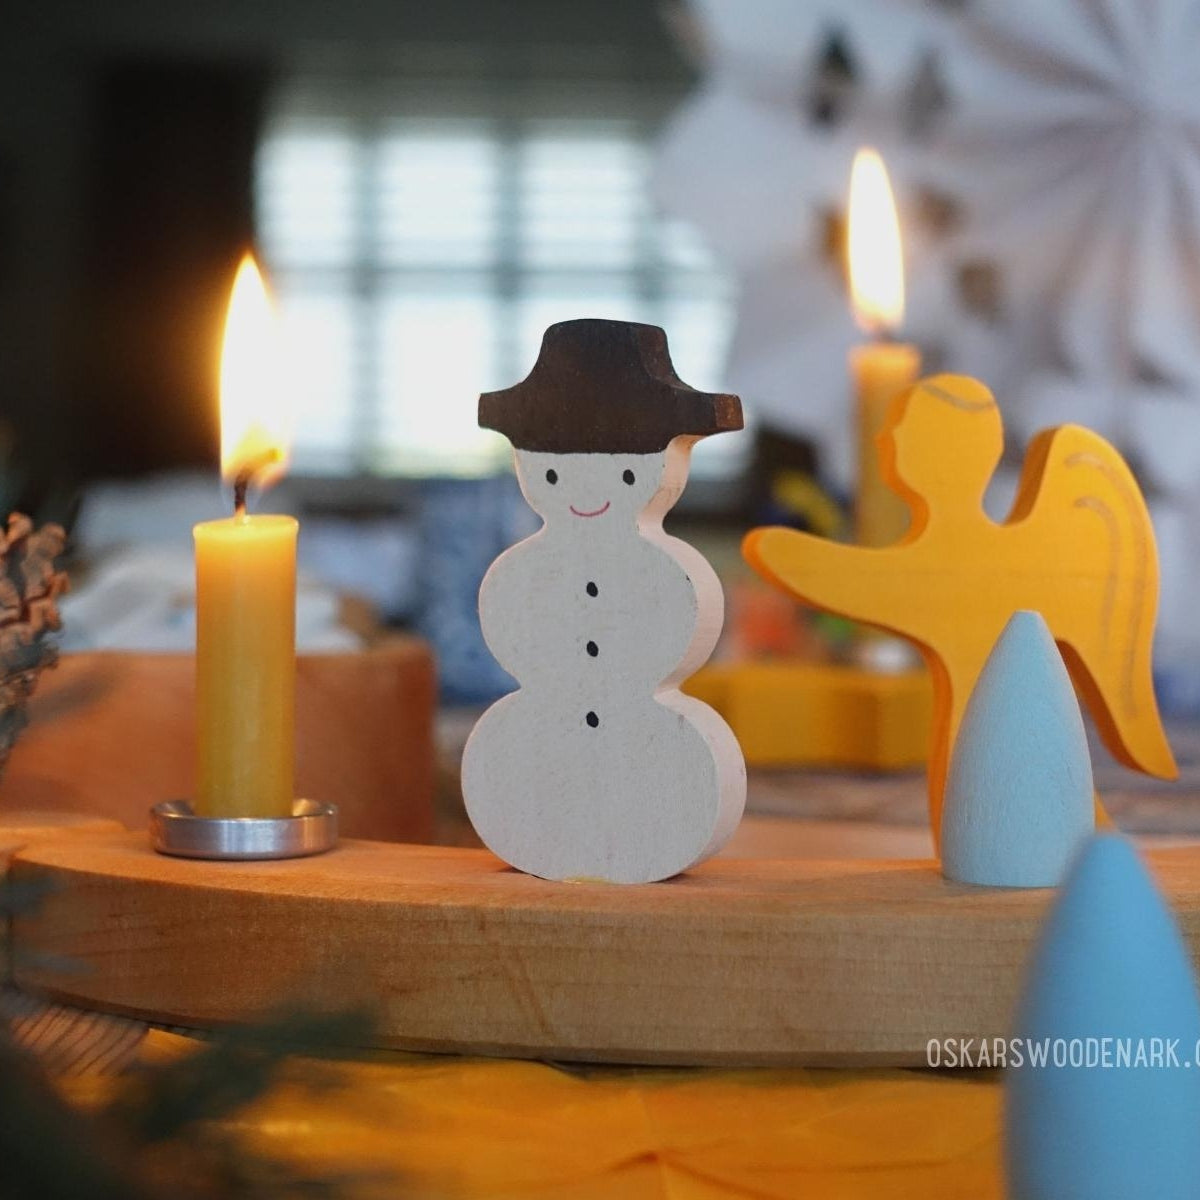 GR-03920 Grimm's Snowman Candle Holder Decoration